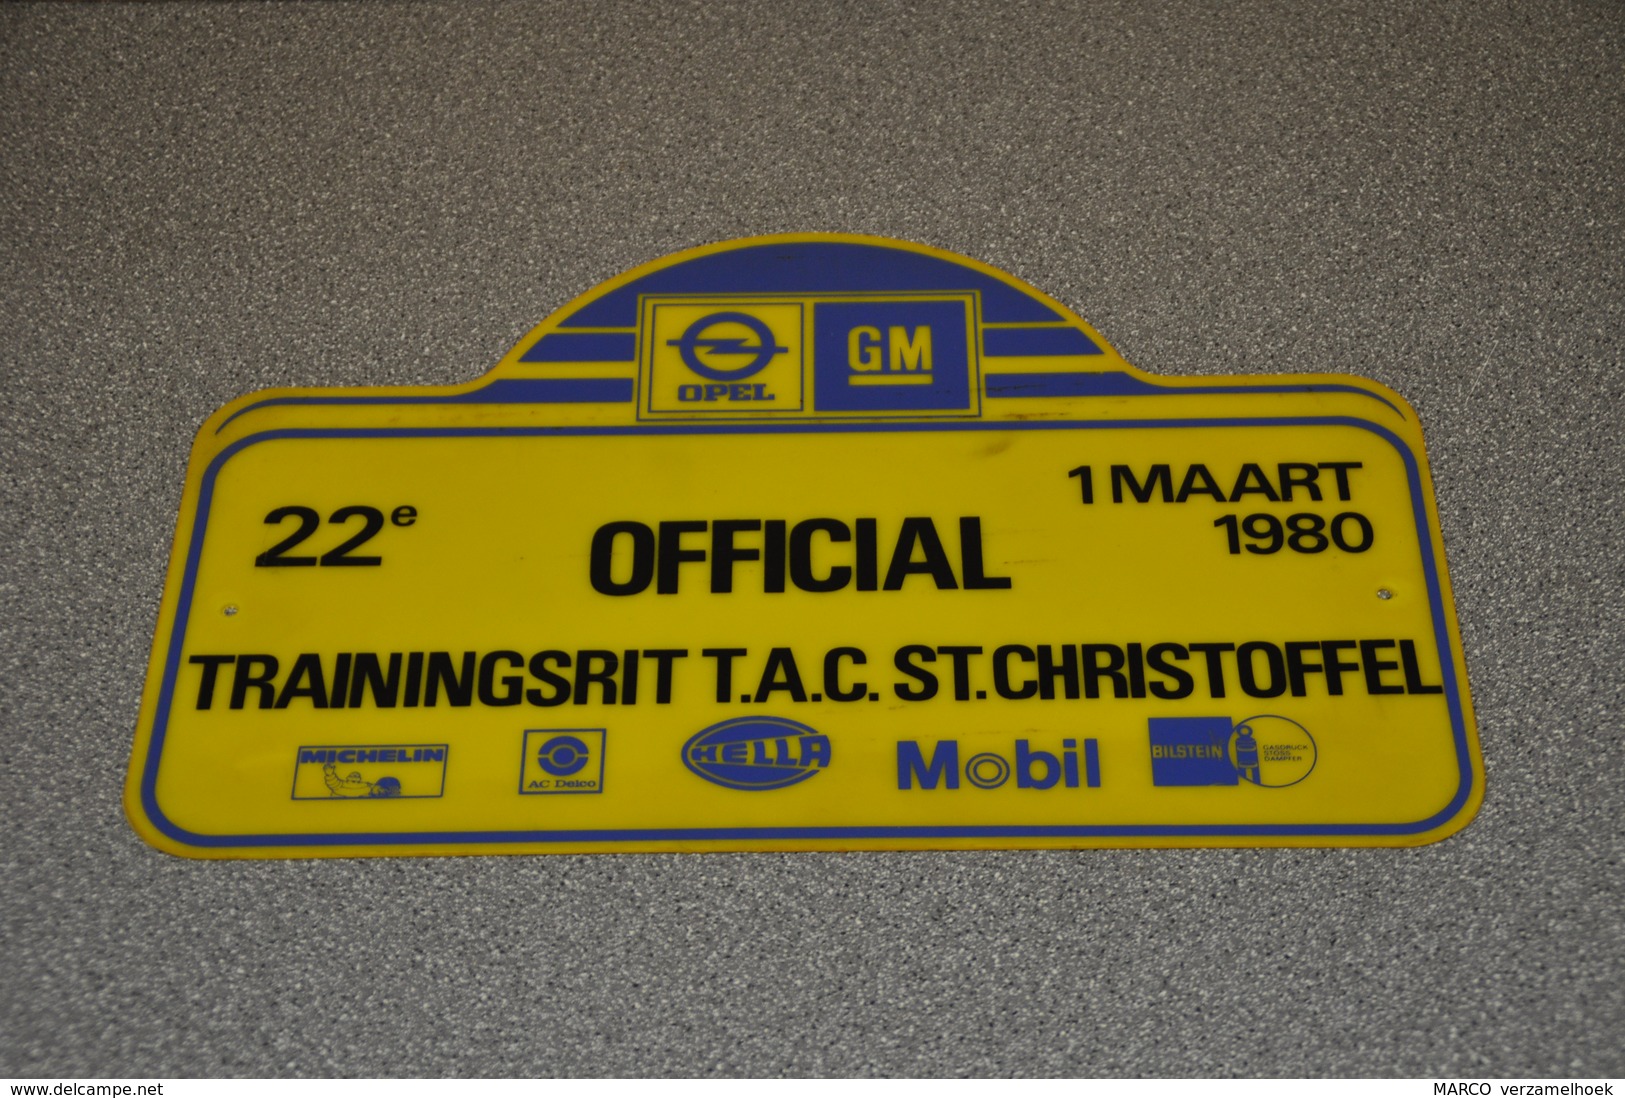 Rally Plaat-rallye Plaque Plastic: Trainingsrit Tilburgse Automobielclub 1980 OFFICIAL Opel-GM General Motors - Rallyeschilder